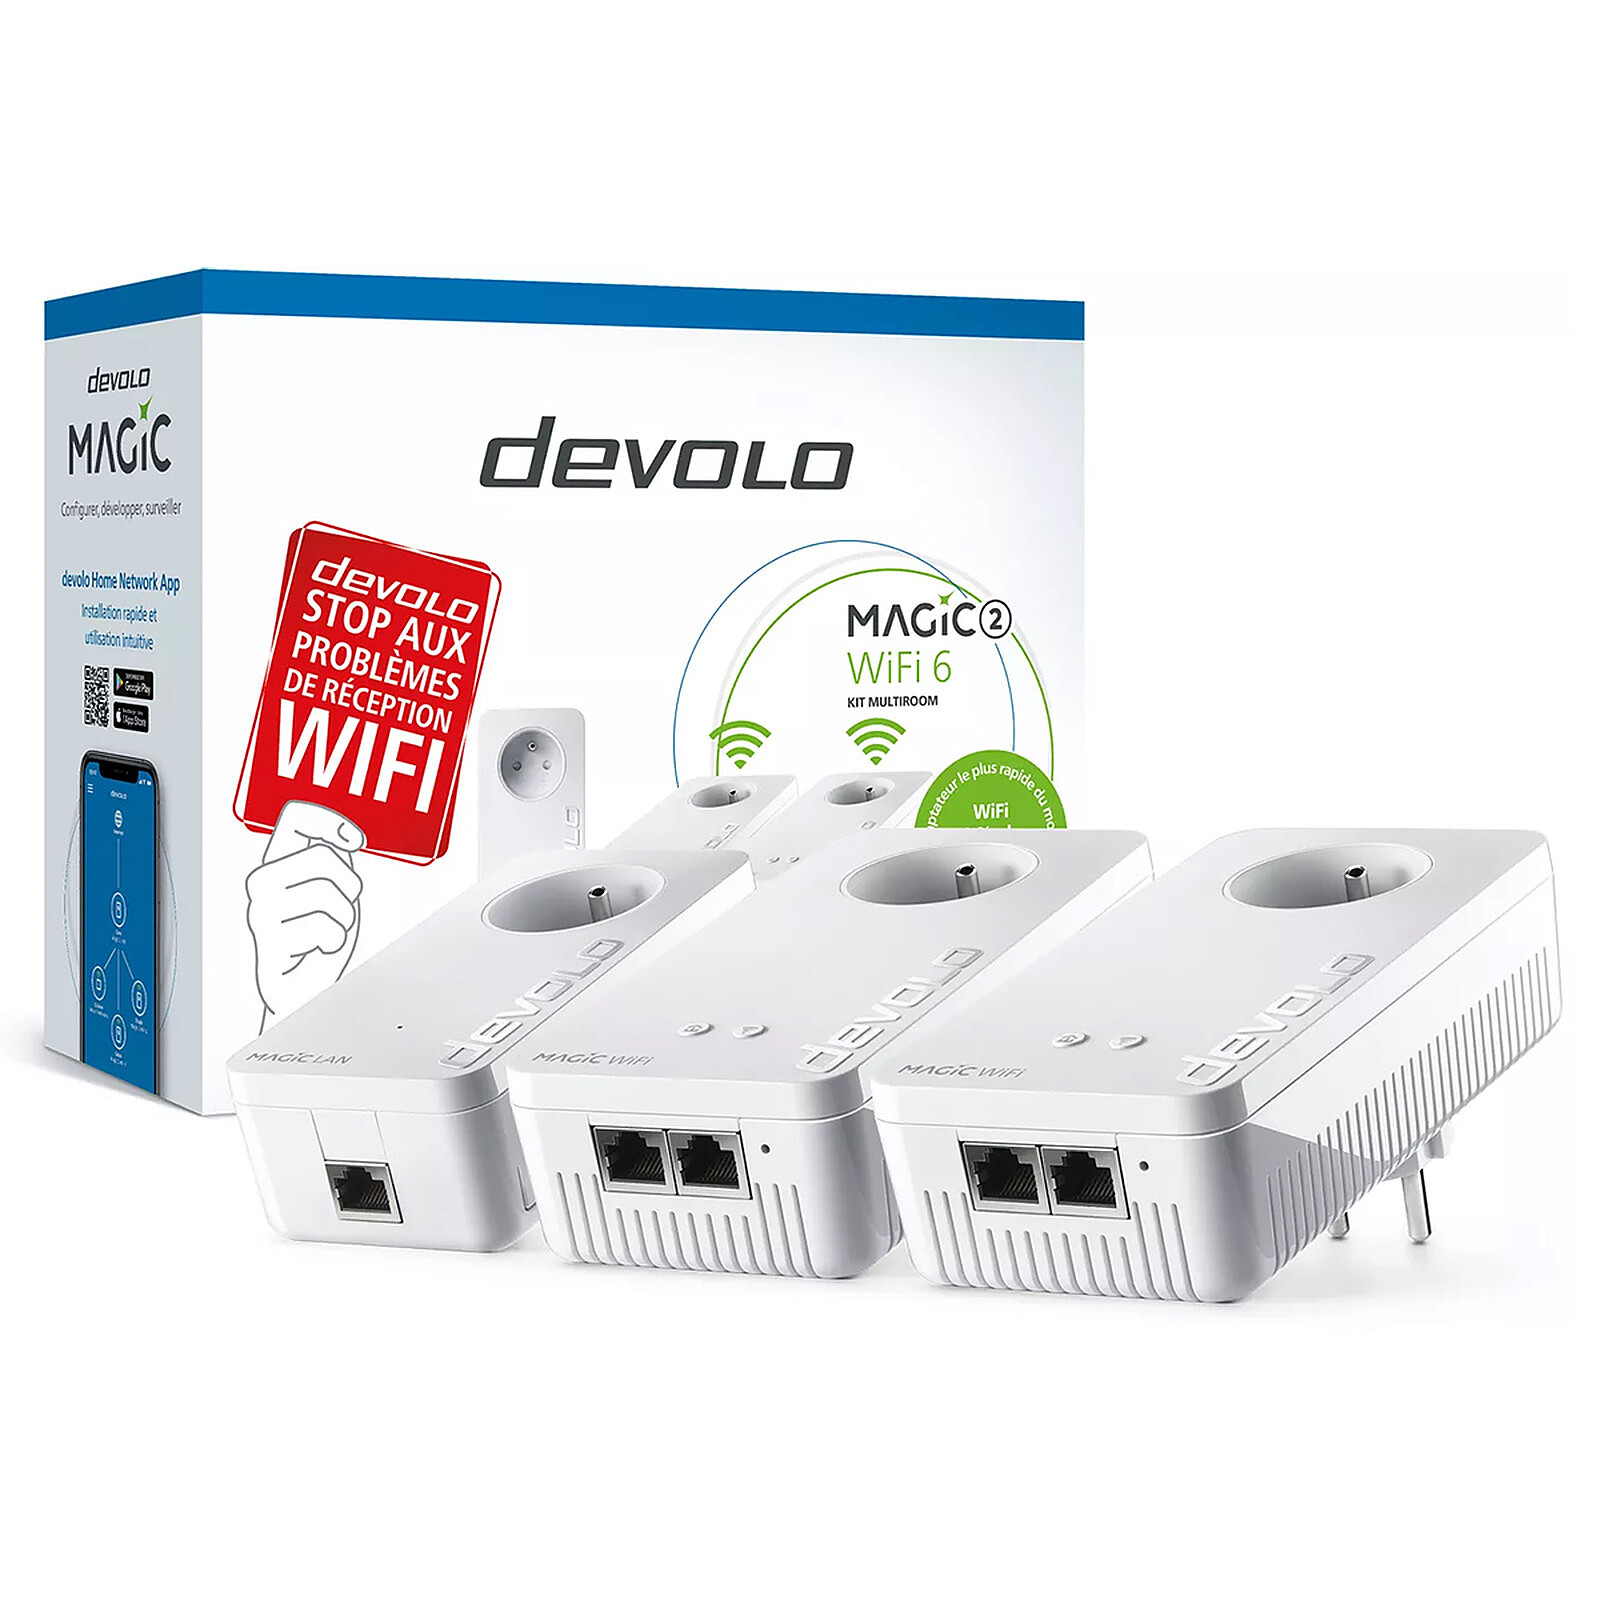 stuk Belofte Volwassenheid devolo Magic 2 Wi-Fi 6 - Multiroom Kit - Powerline adapter Devolo AG on LDLC